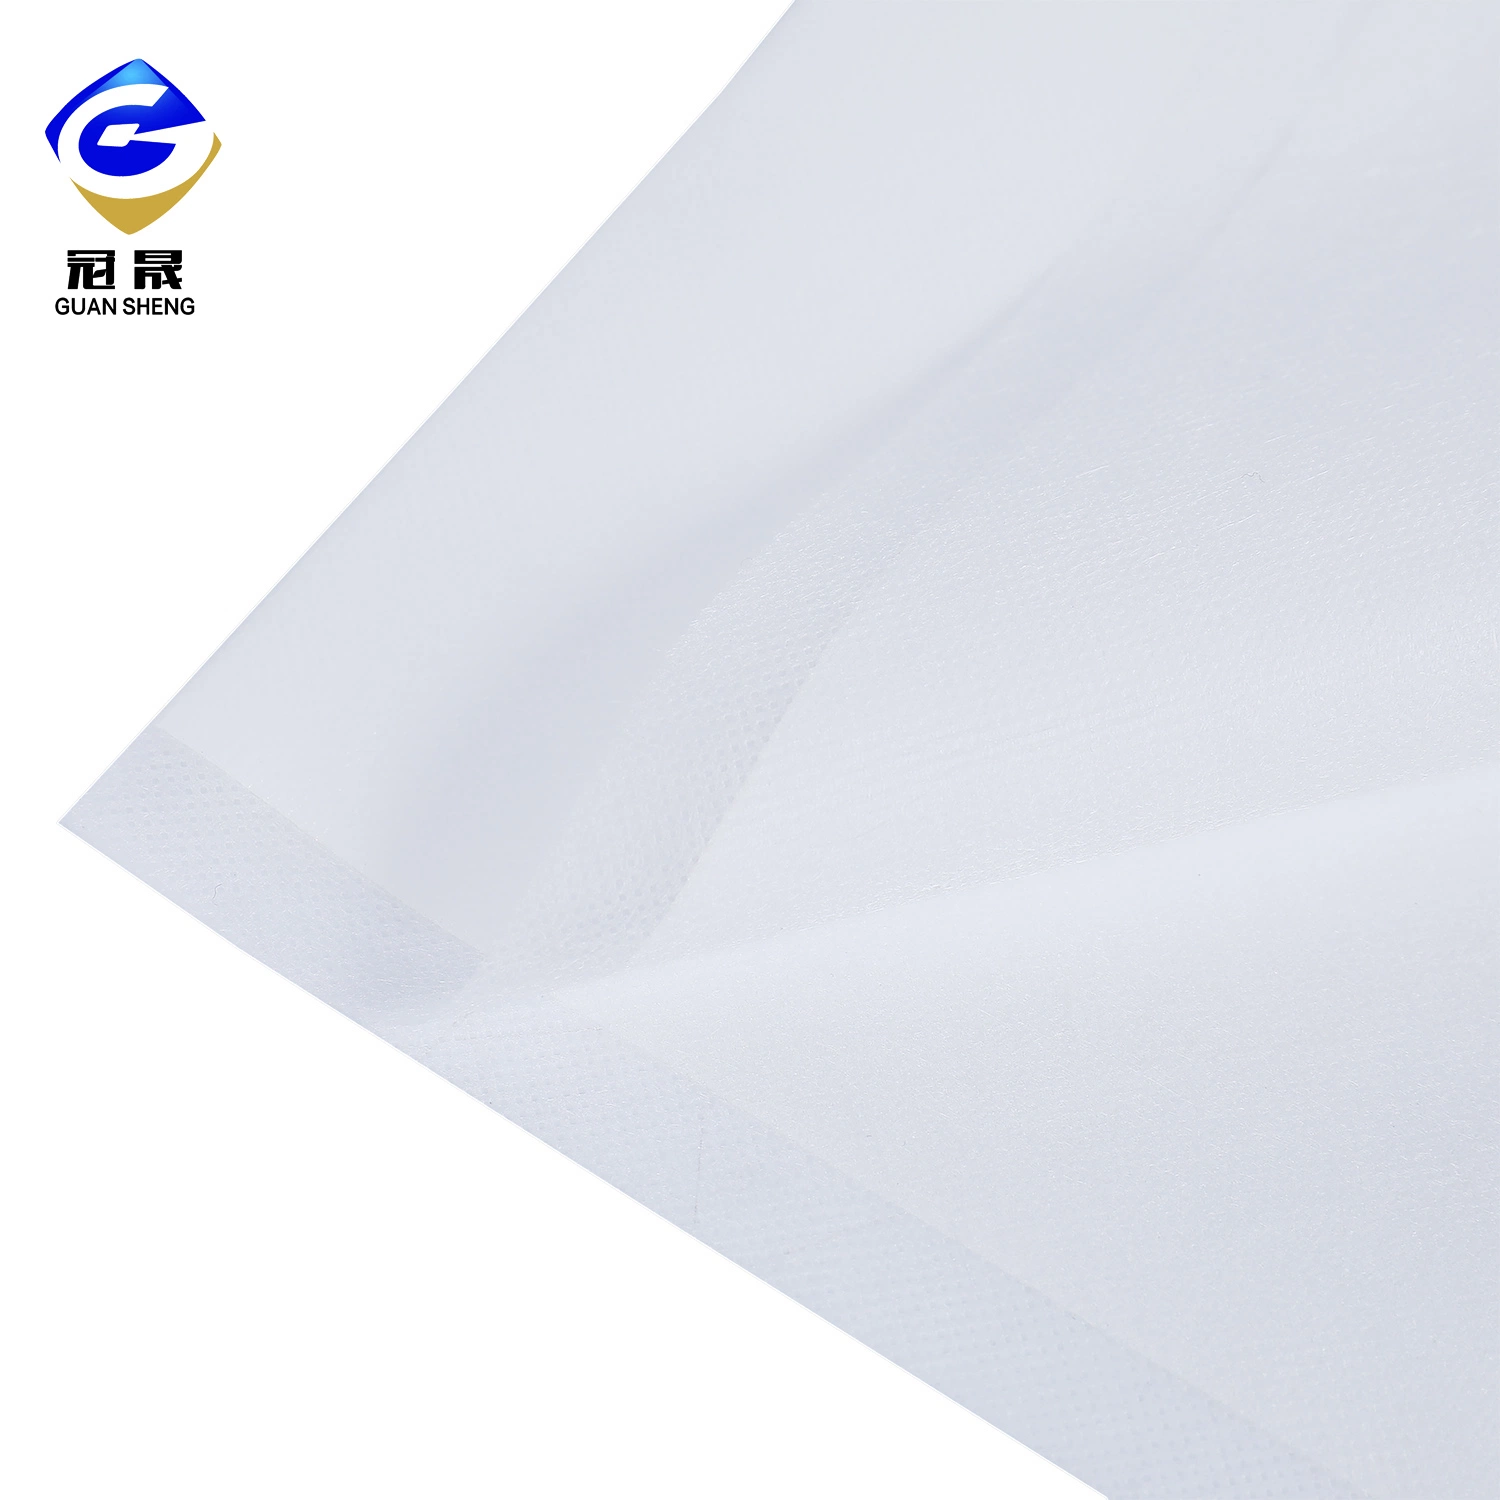 25GSM 40GSM 100% Polypropylene SMS PP Spunbond Nonwoven Fabric for Masks or Other Medical Supplies